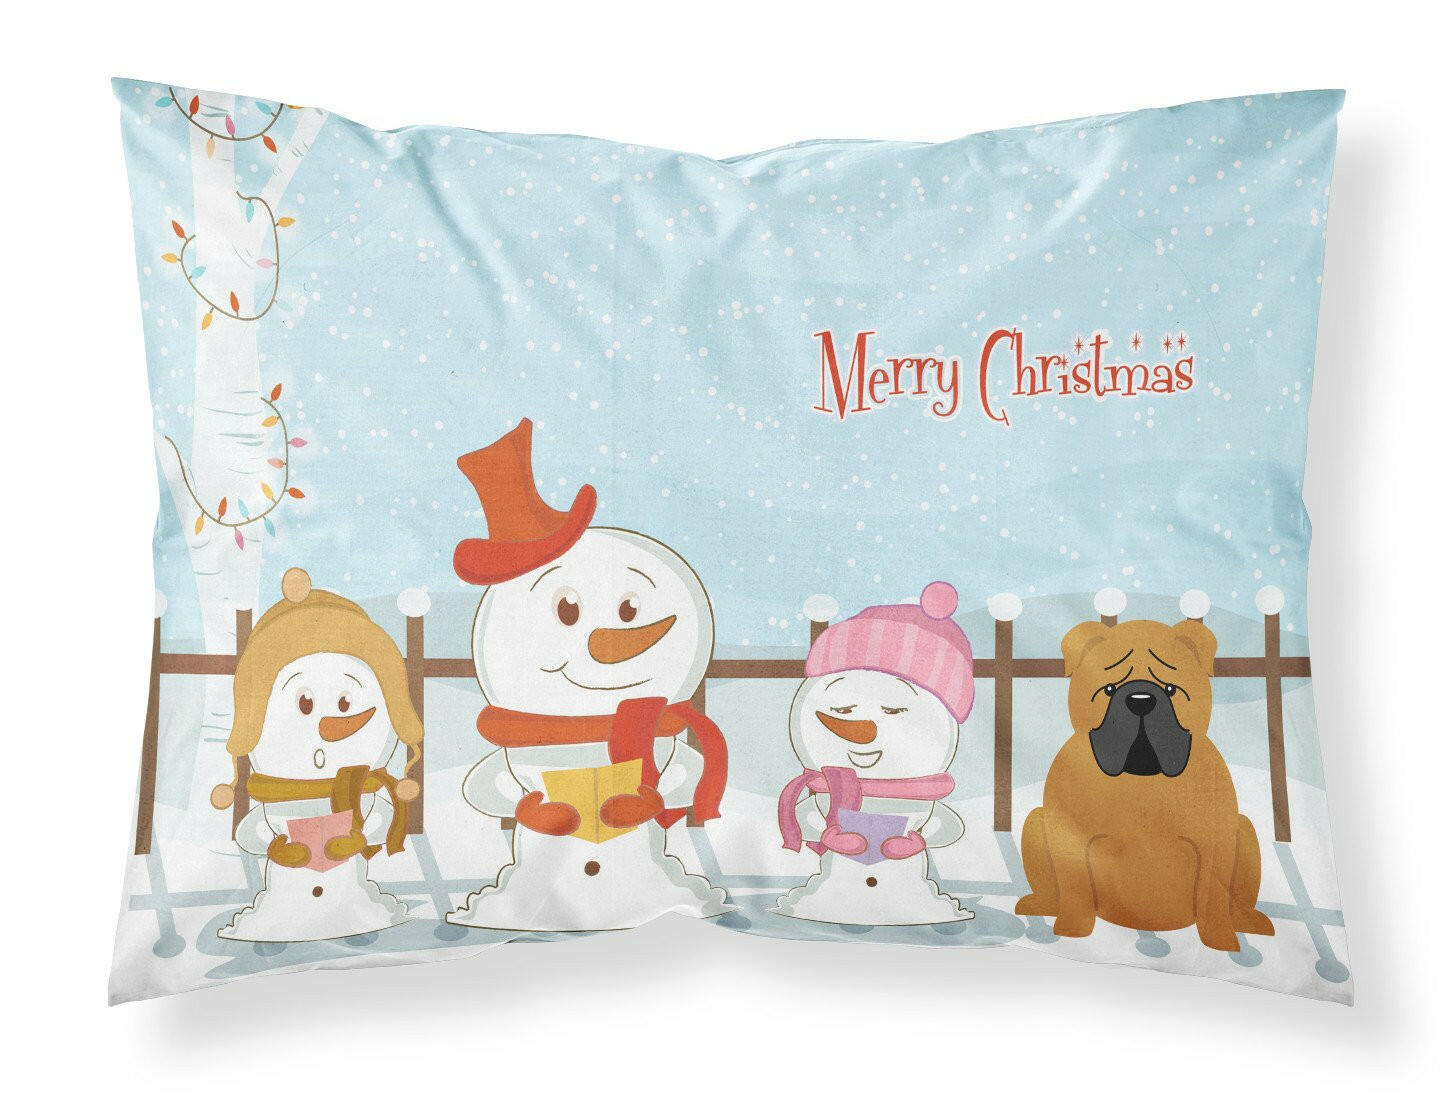 Merry Christmas Carolers English Bulldog Red Fabric Standard Pillowcase BB2453PILLOWCASE by Caroline's Treasures